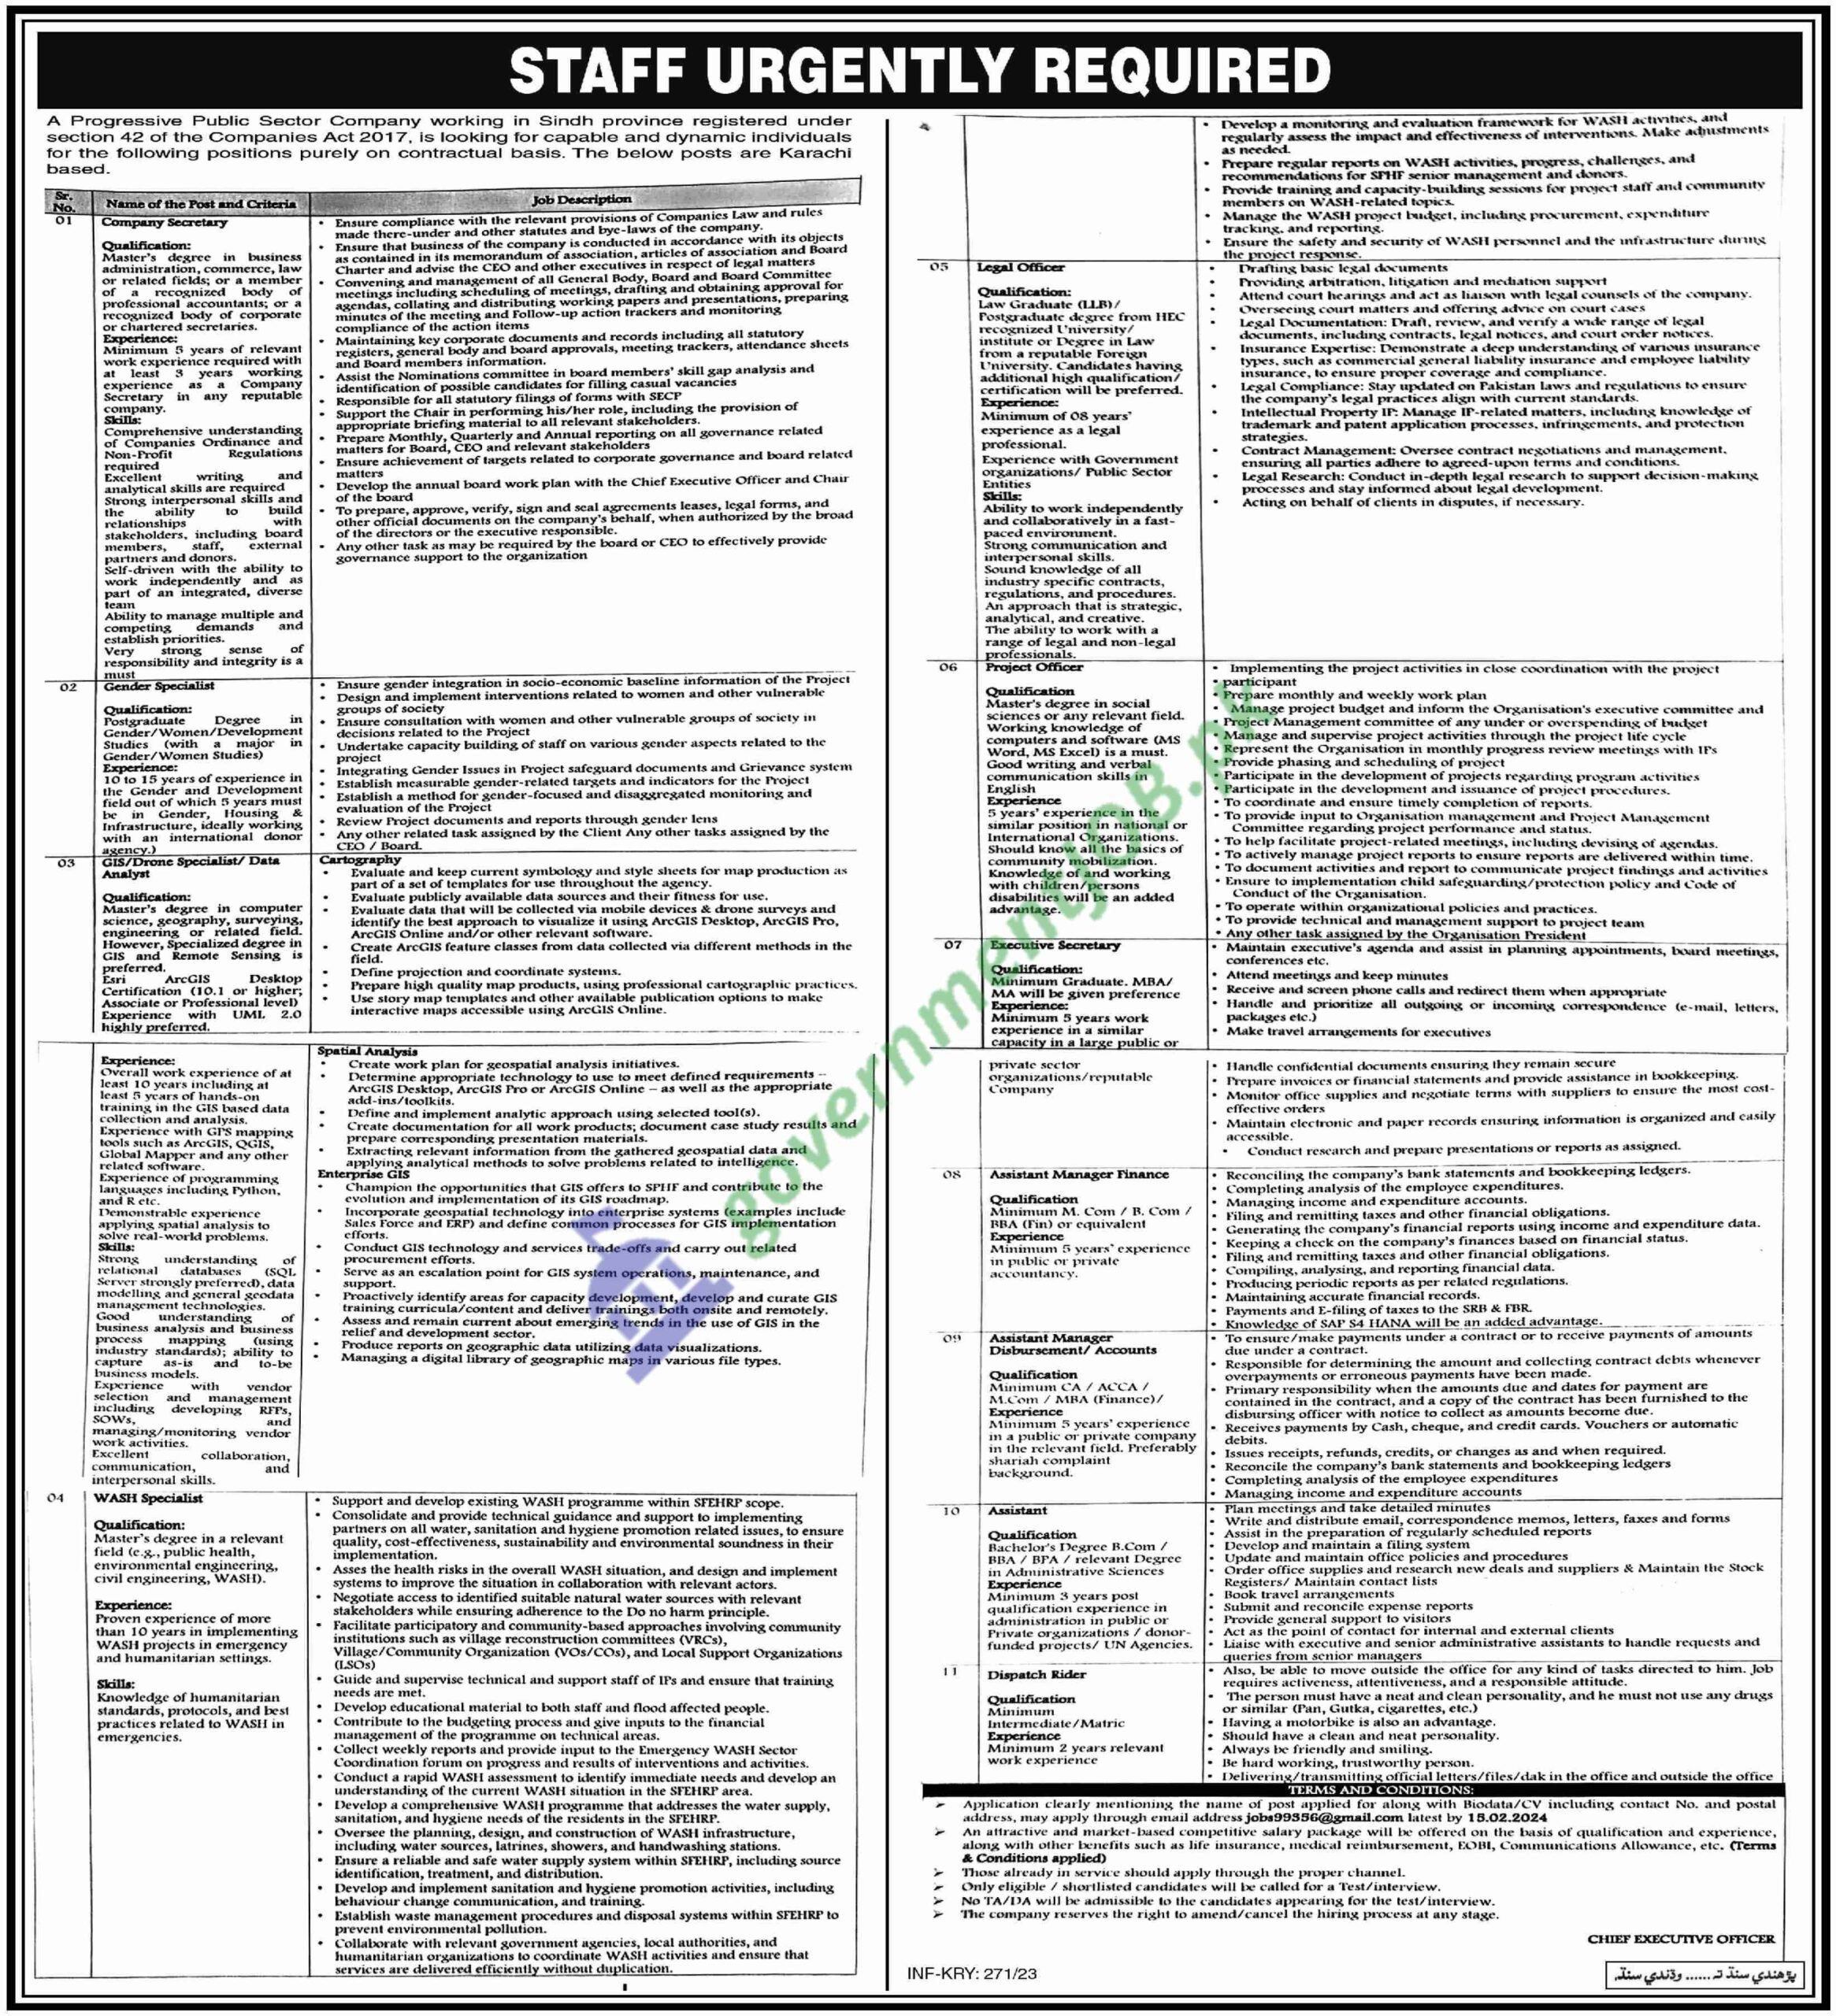 Public Sector Organization Sindh Jobs 2024